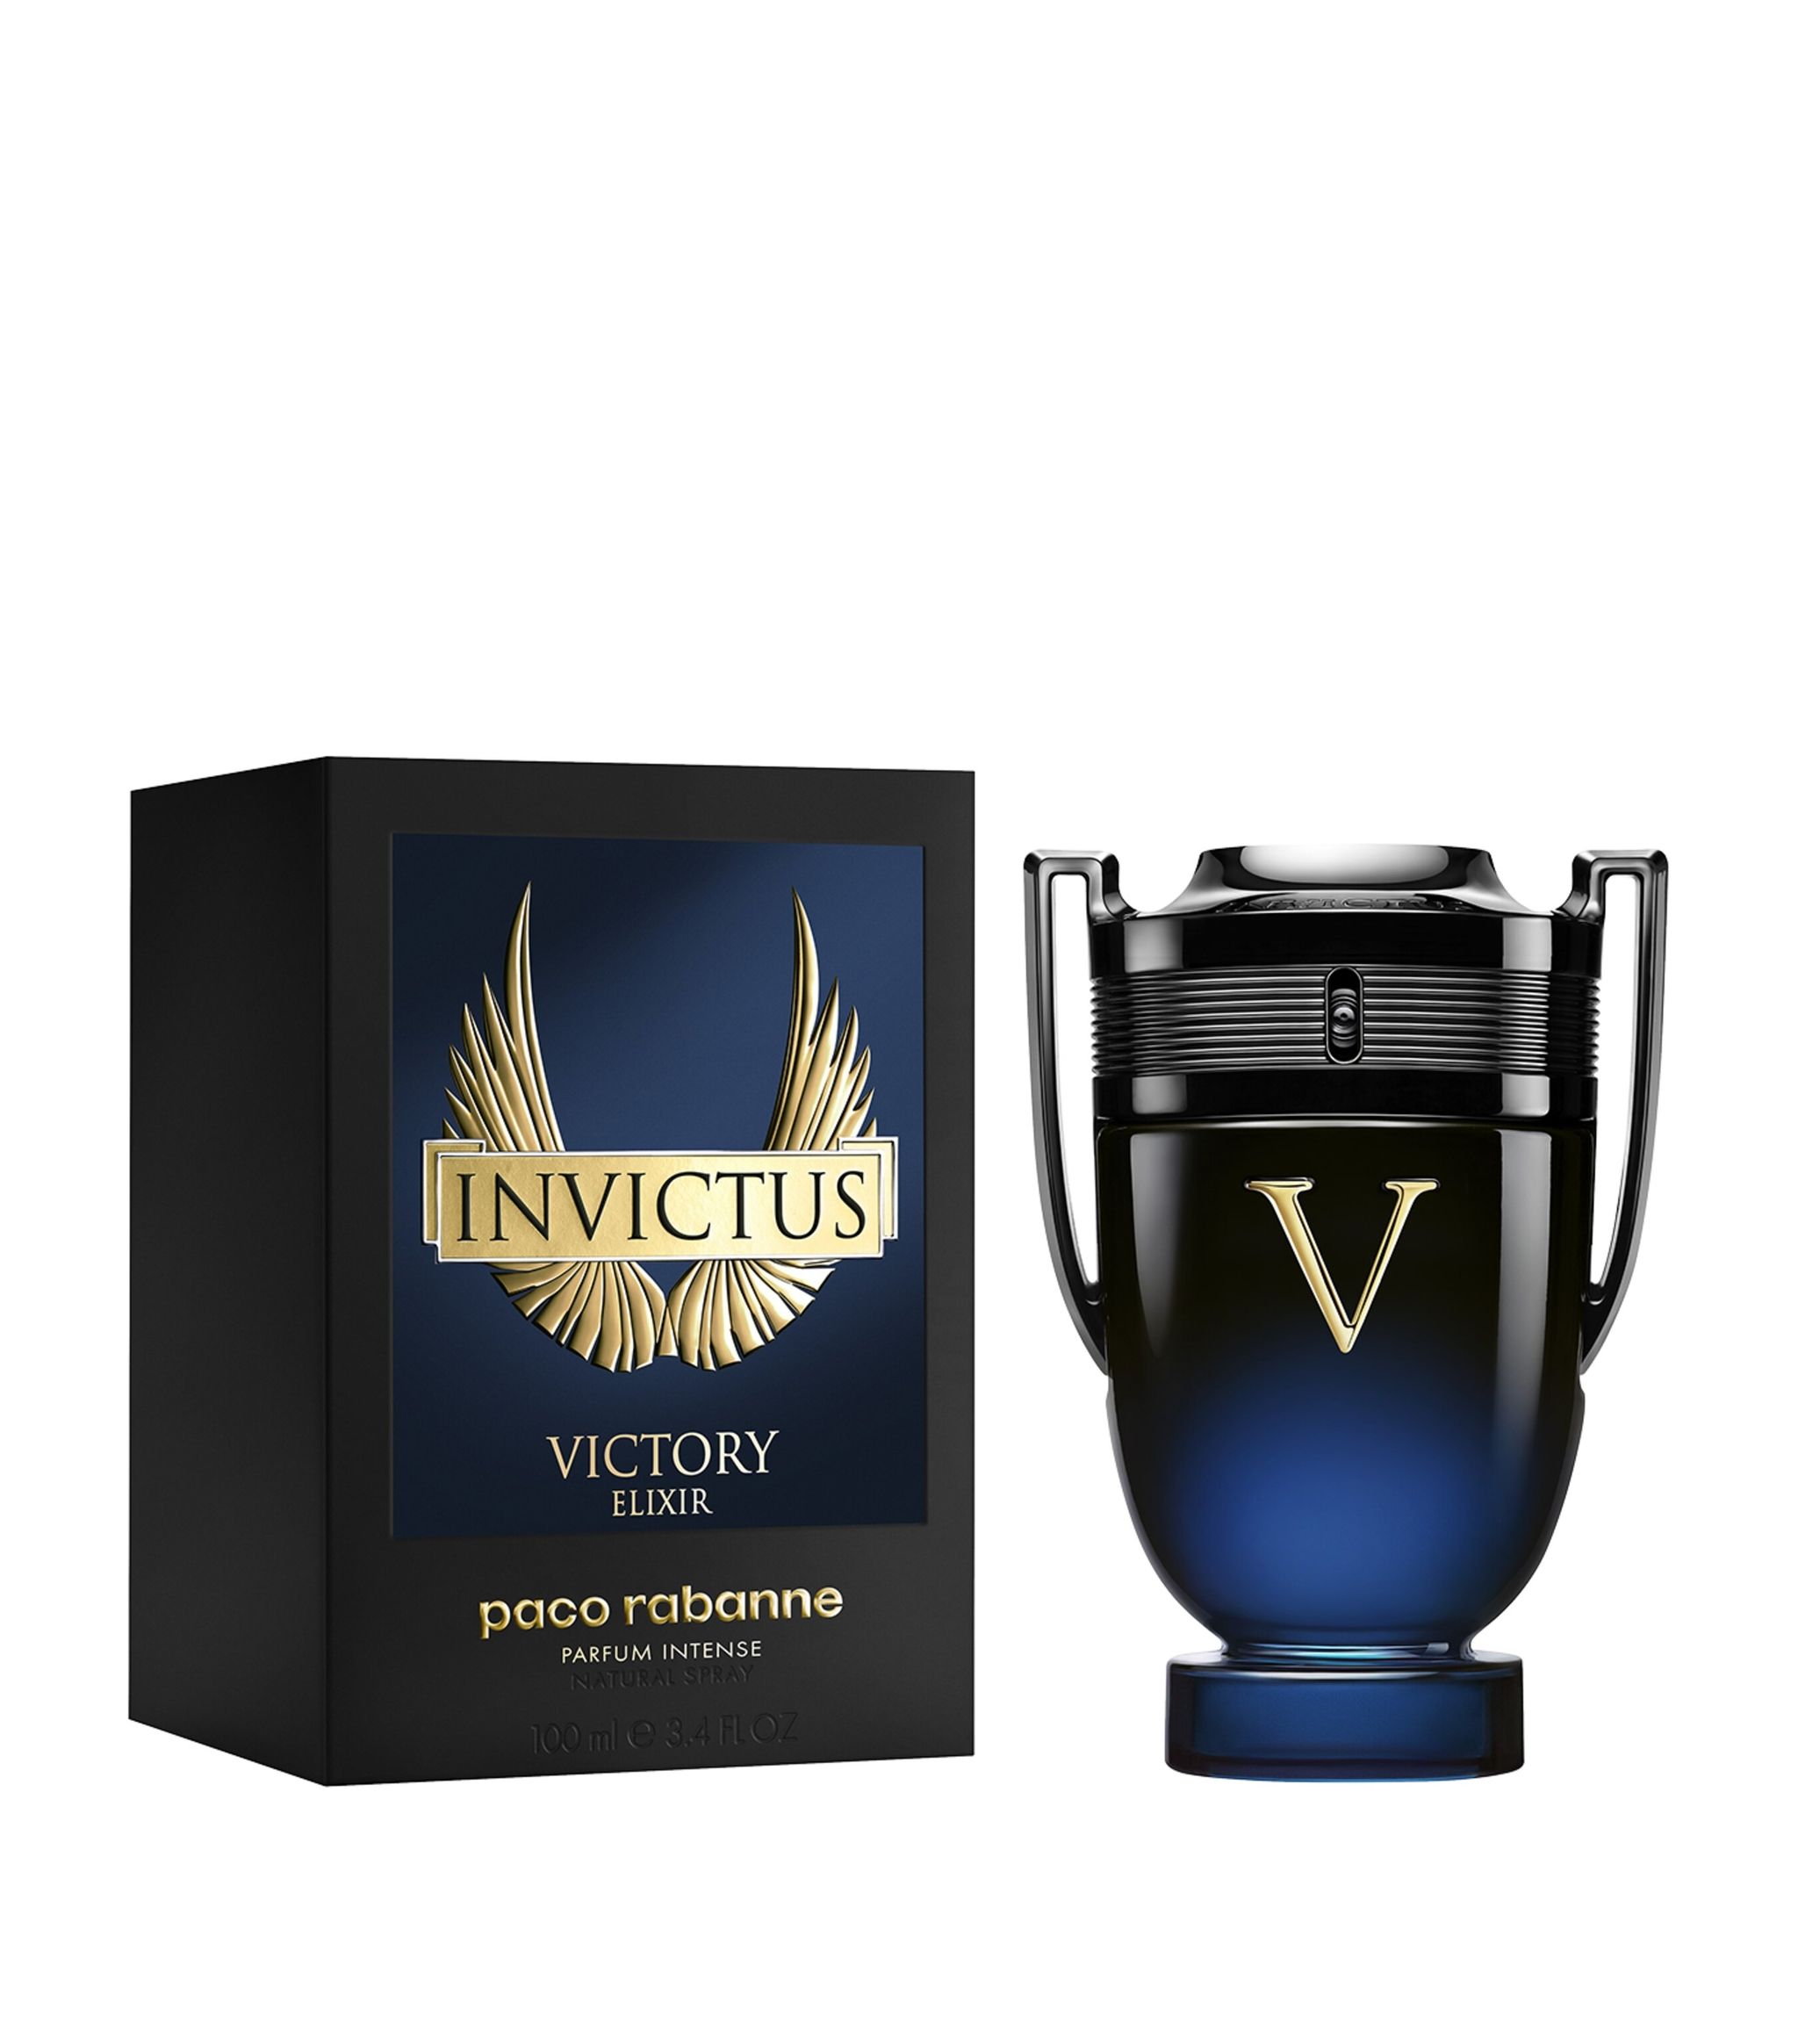 Buy Paco Rabanne invictus victory elixir | Fragrance Planet